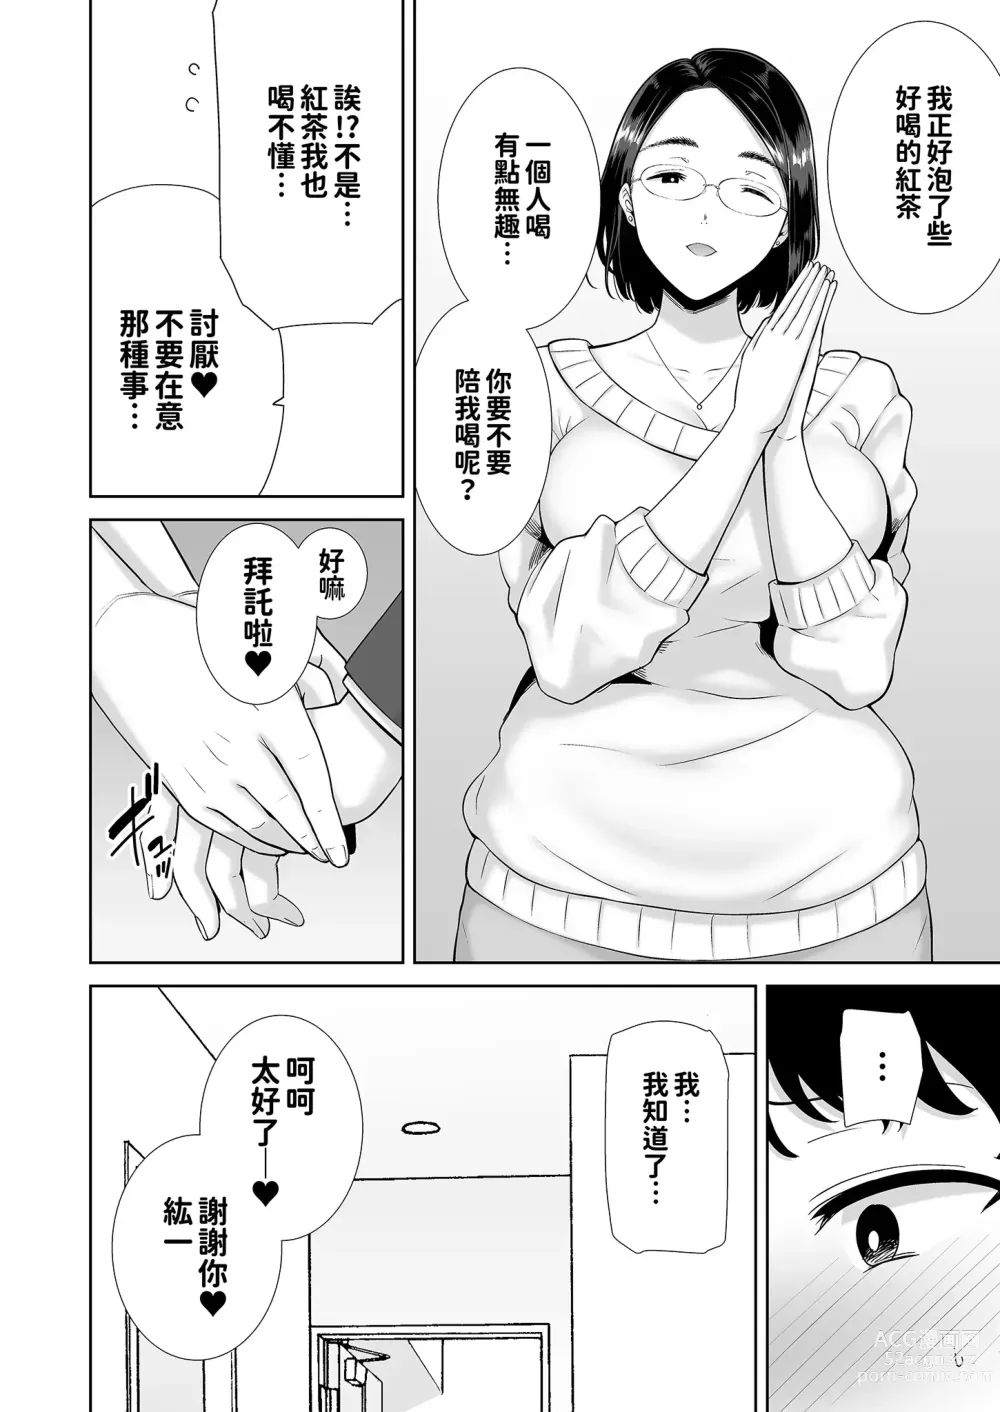 Page 11 of doujinshi sdgsd